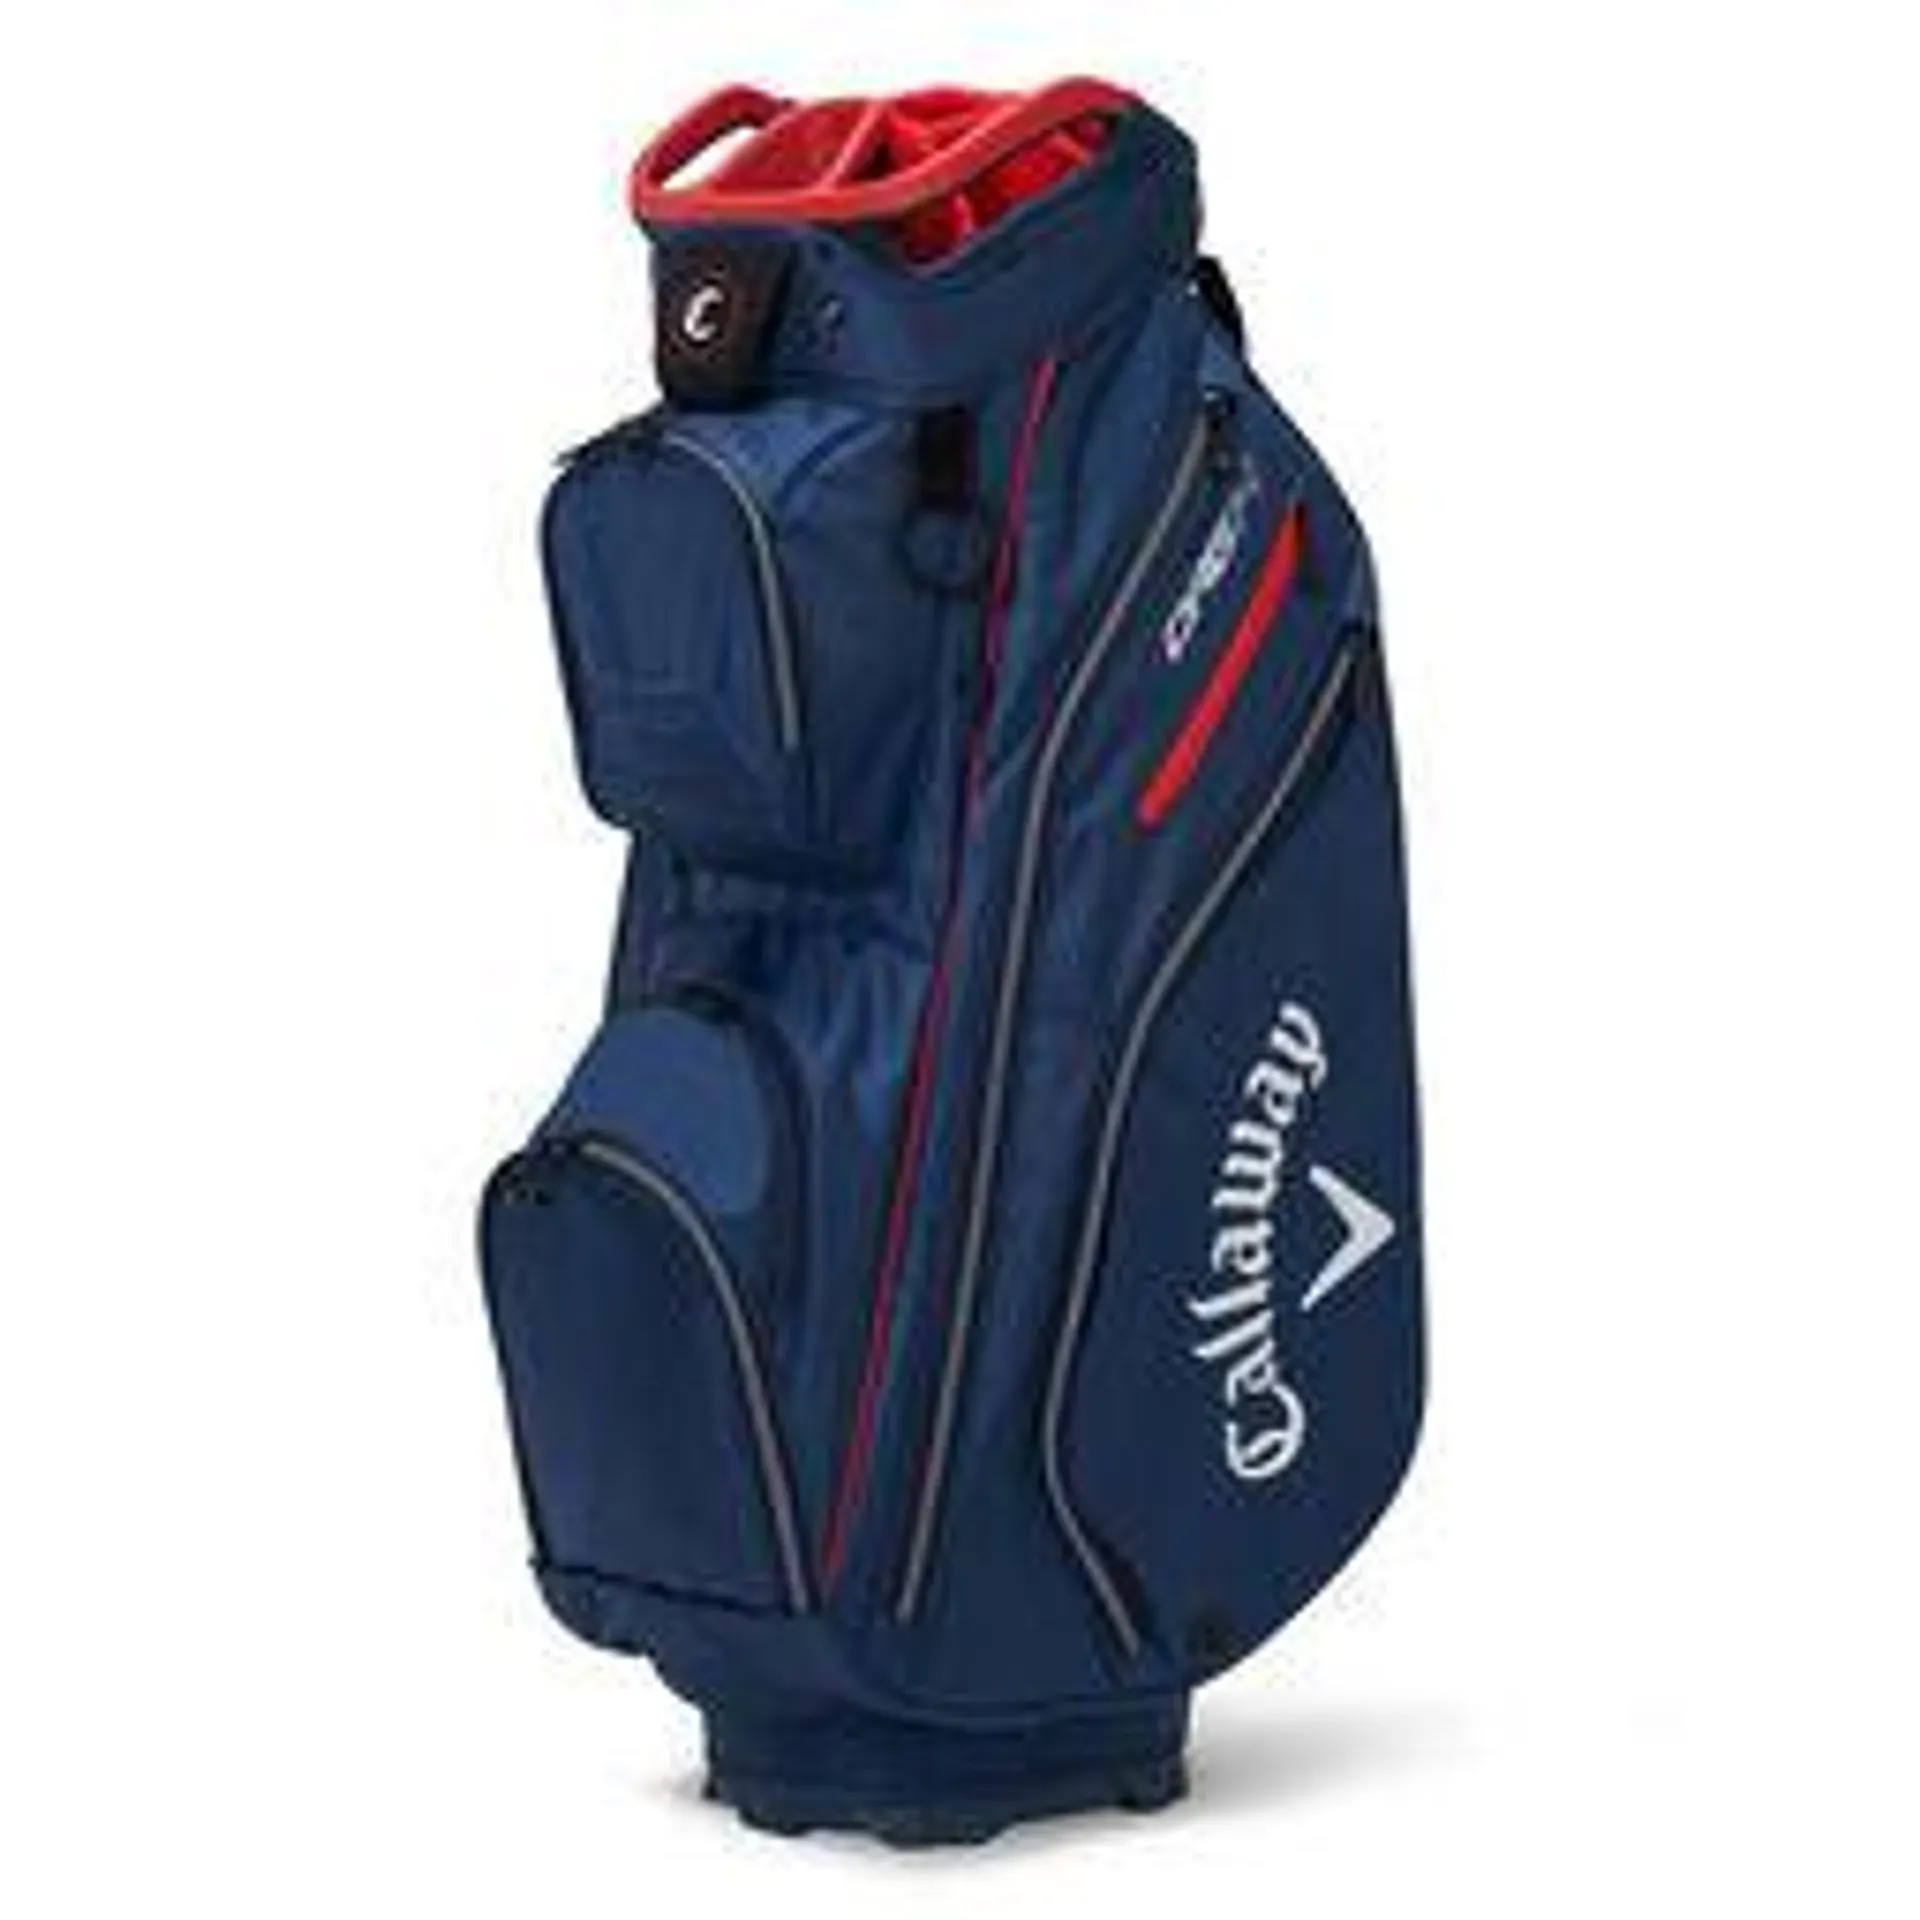 Callaway Golf Org 14 Cart Bag